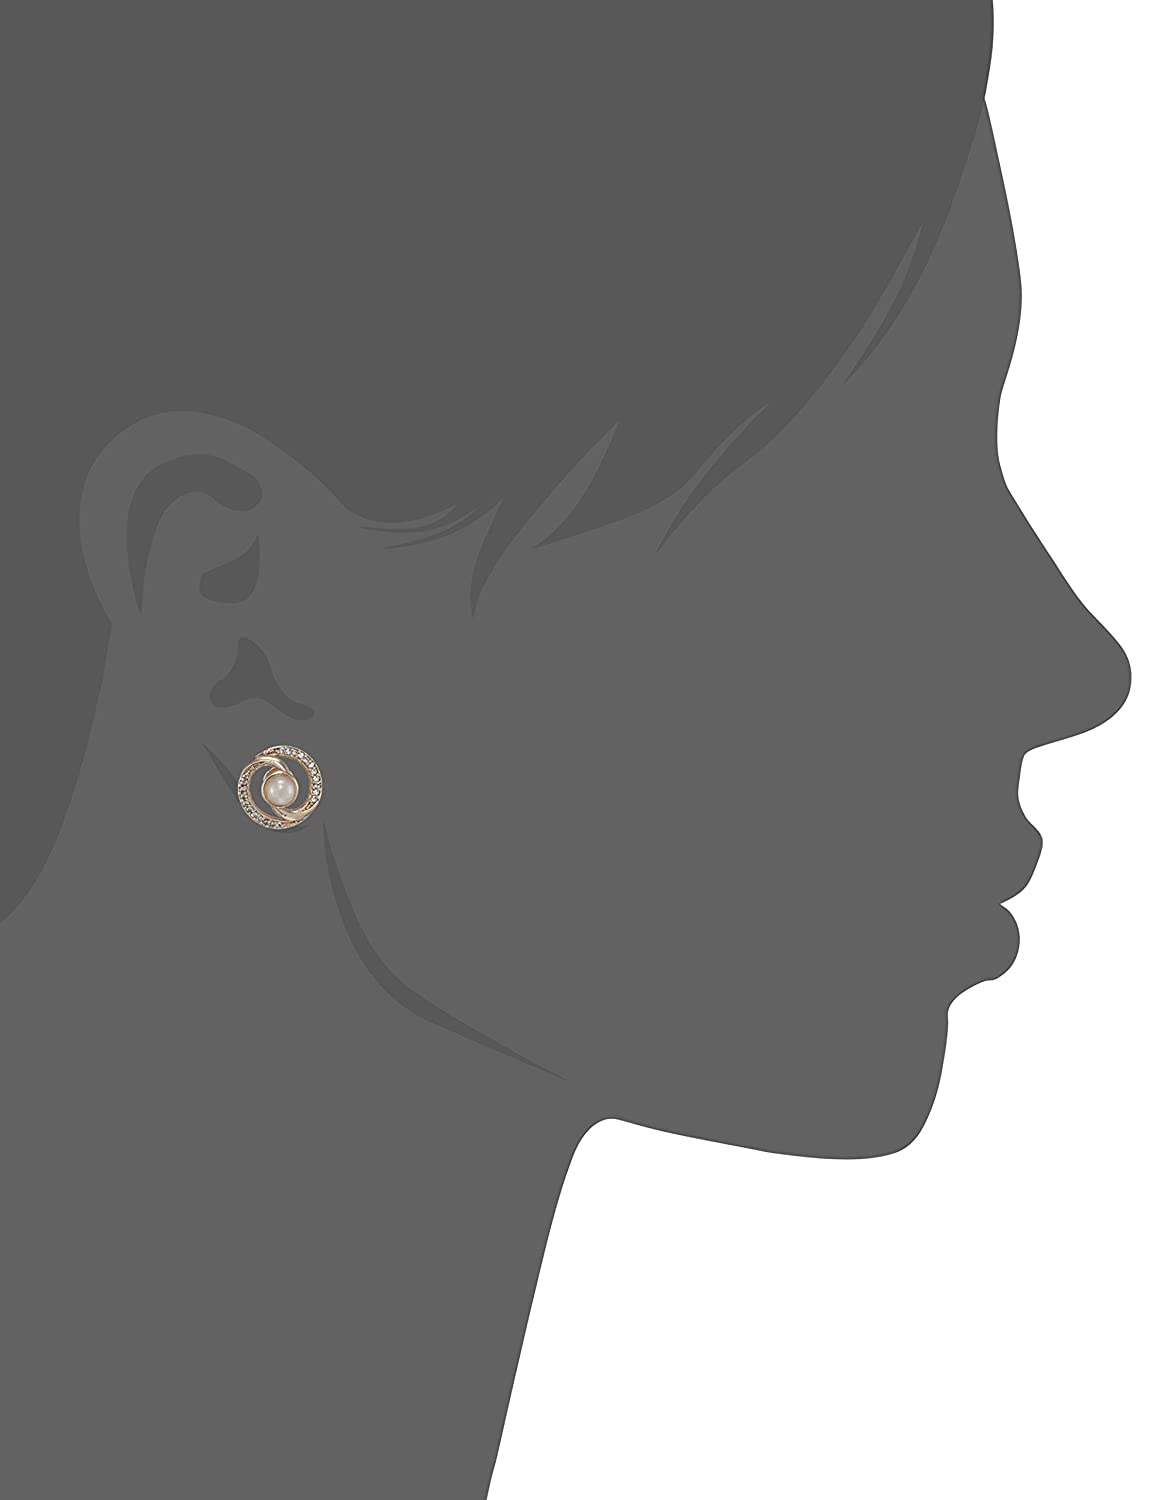 Estele 24 Kt Rose Gold Plated American Diamond Clock Pearl Stud Earrings for women